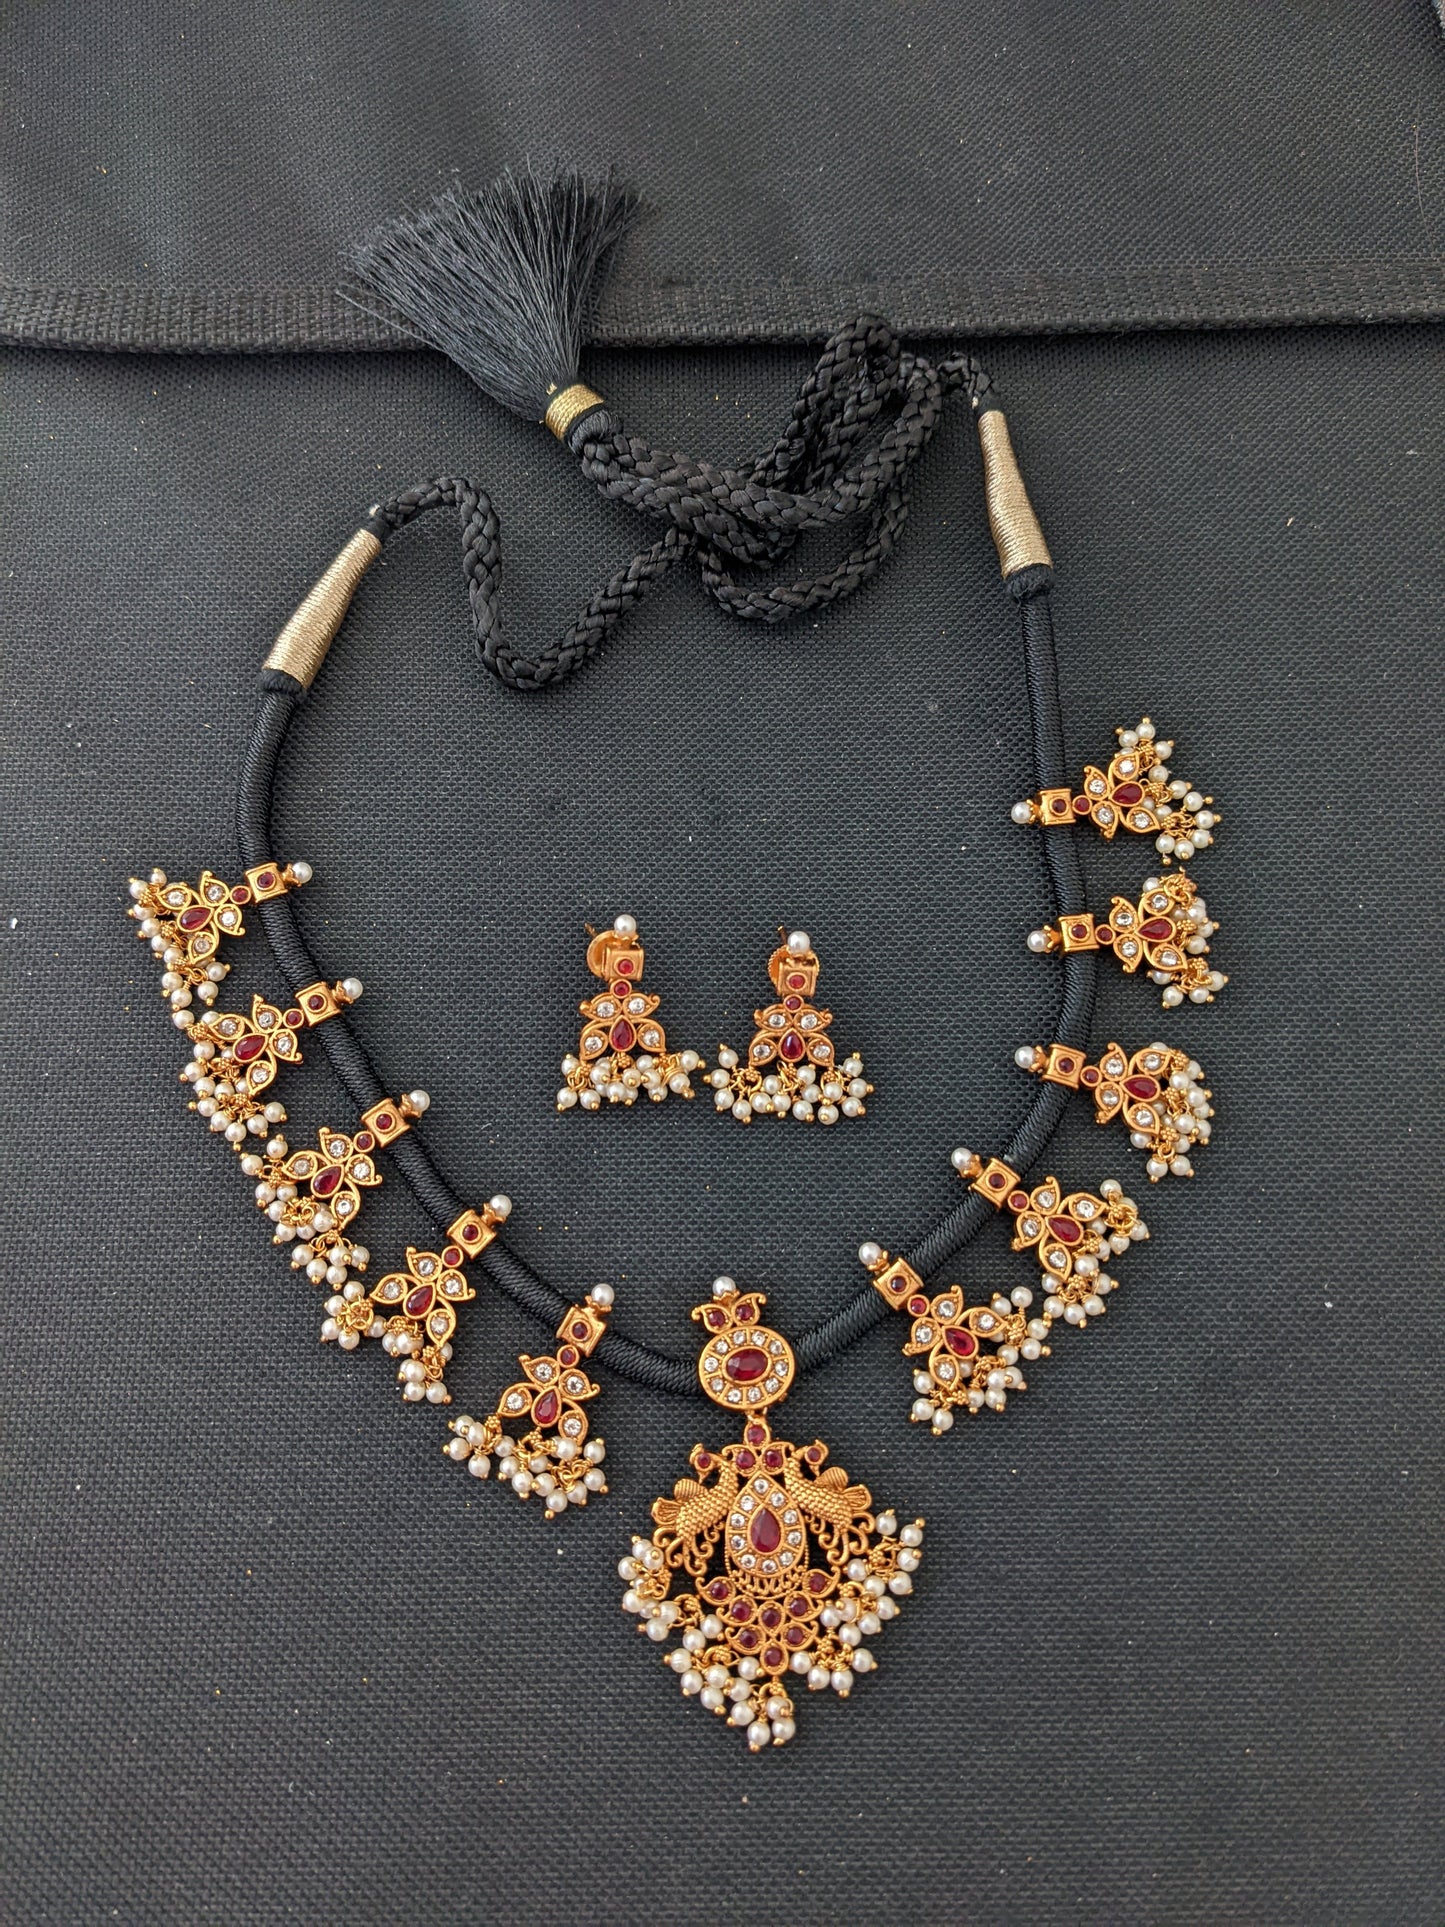 Black dori Peacock Choker Necklace and Earrings set - Design 2